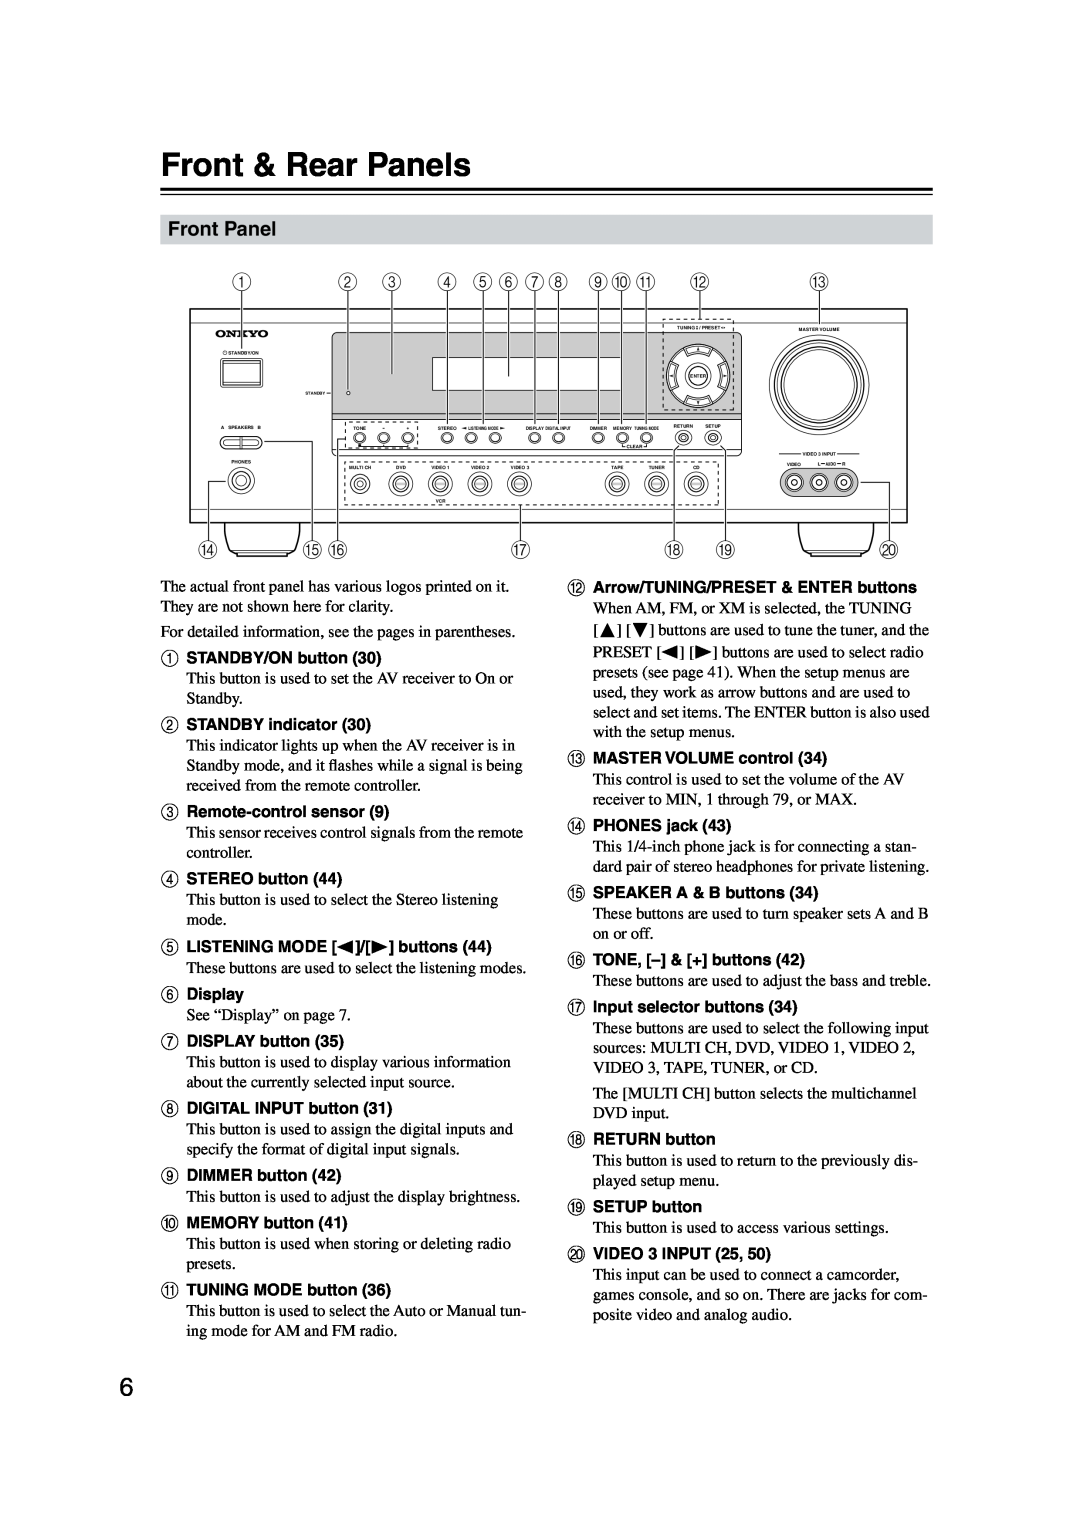 Onkyo TX-SR573 instruction manual Front & Rear Panels, Front Panel, 2 3 4 5 6 78 9J K L 